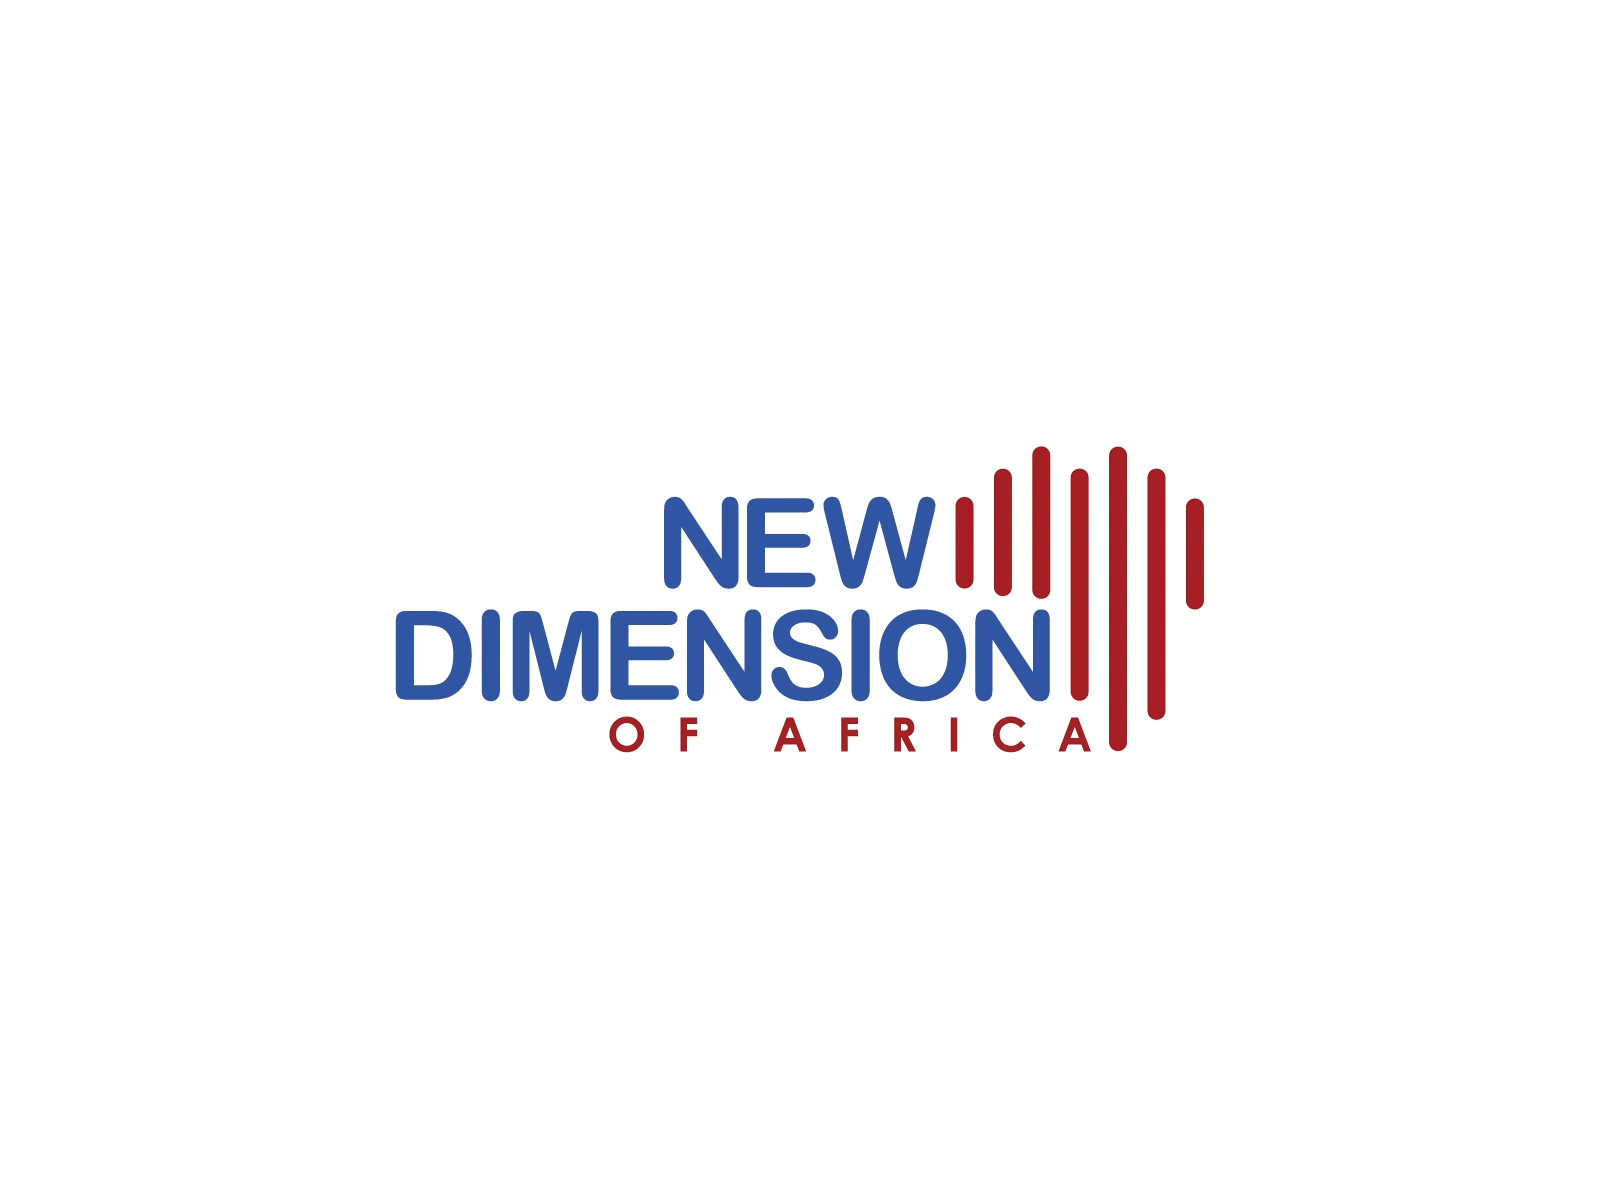 NDA - New Dimension Of Africa